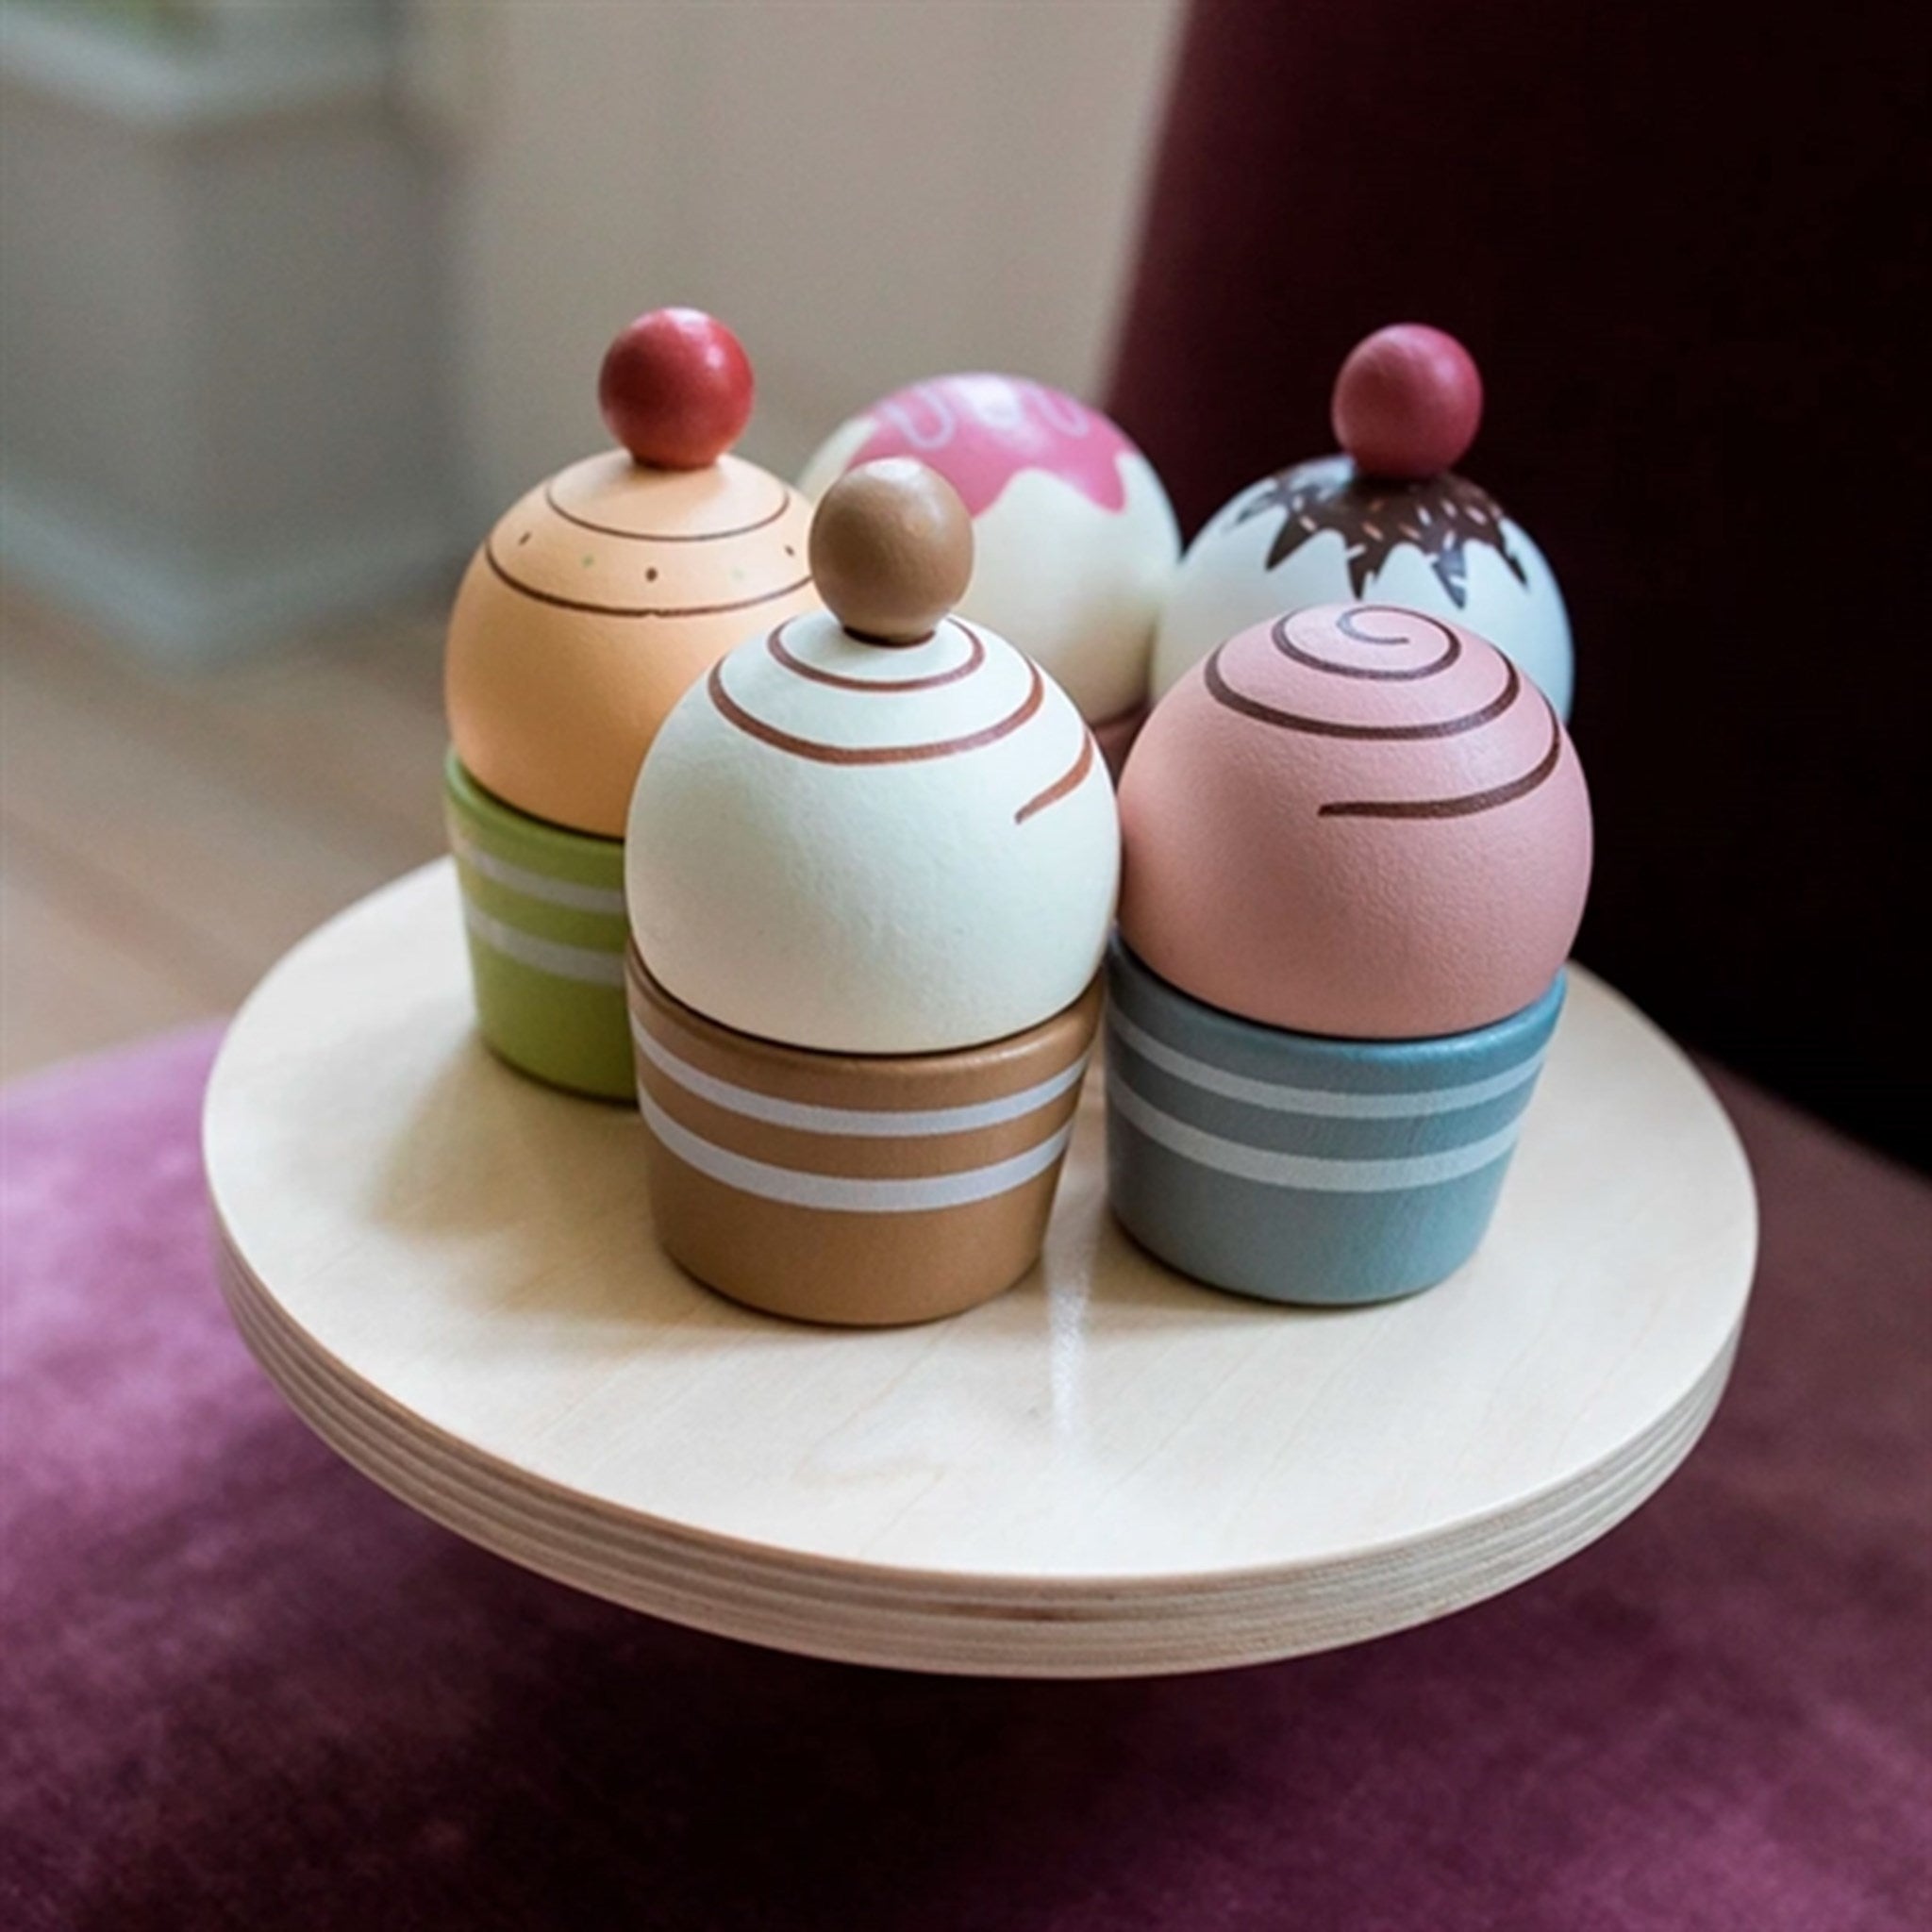 MaMaMeMo Cupcakes on Cake Platter 2